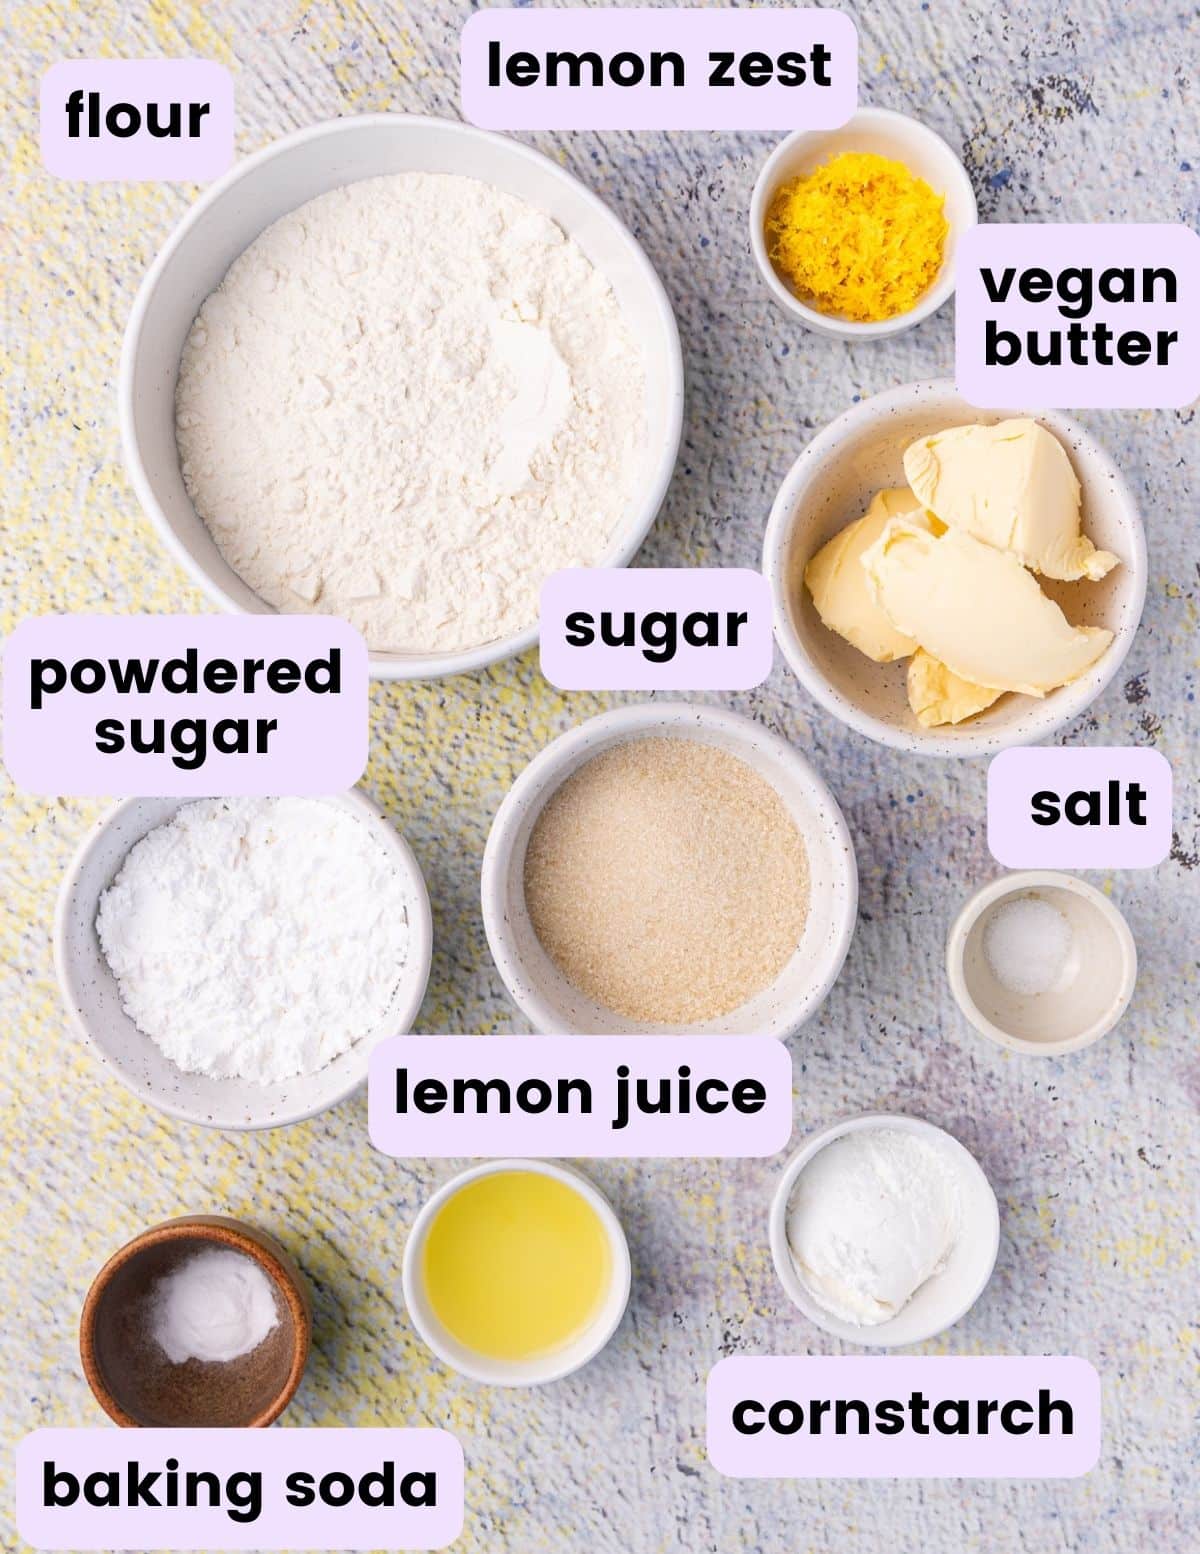 flour, lemon zest, vegan butter, sugar, powdered sugar, salt, baking soda, lemon juice, cornstarch